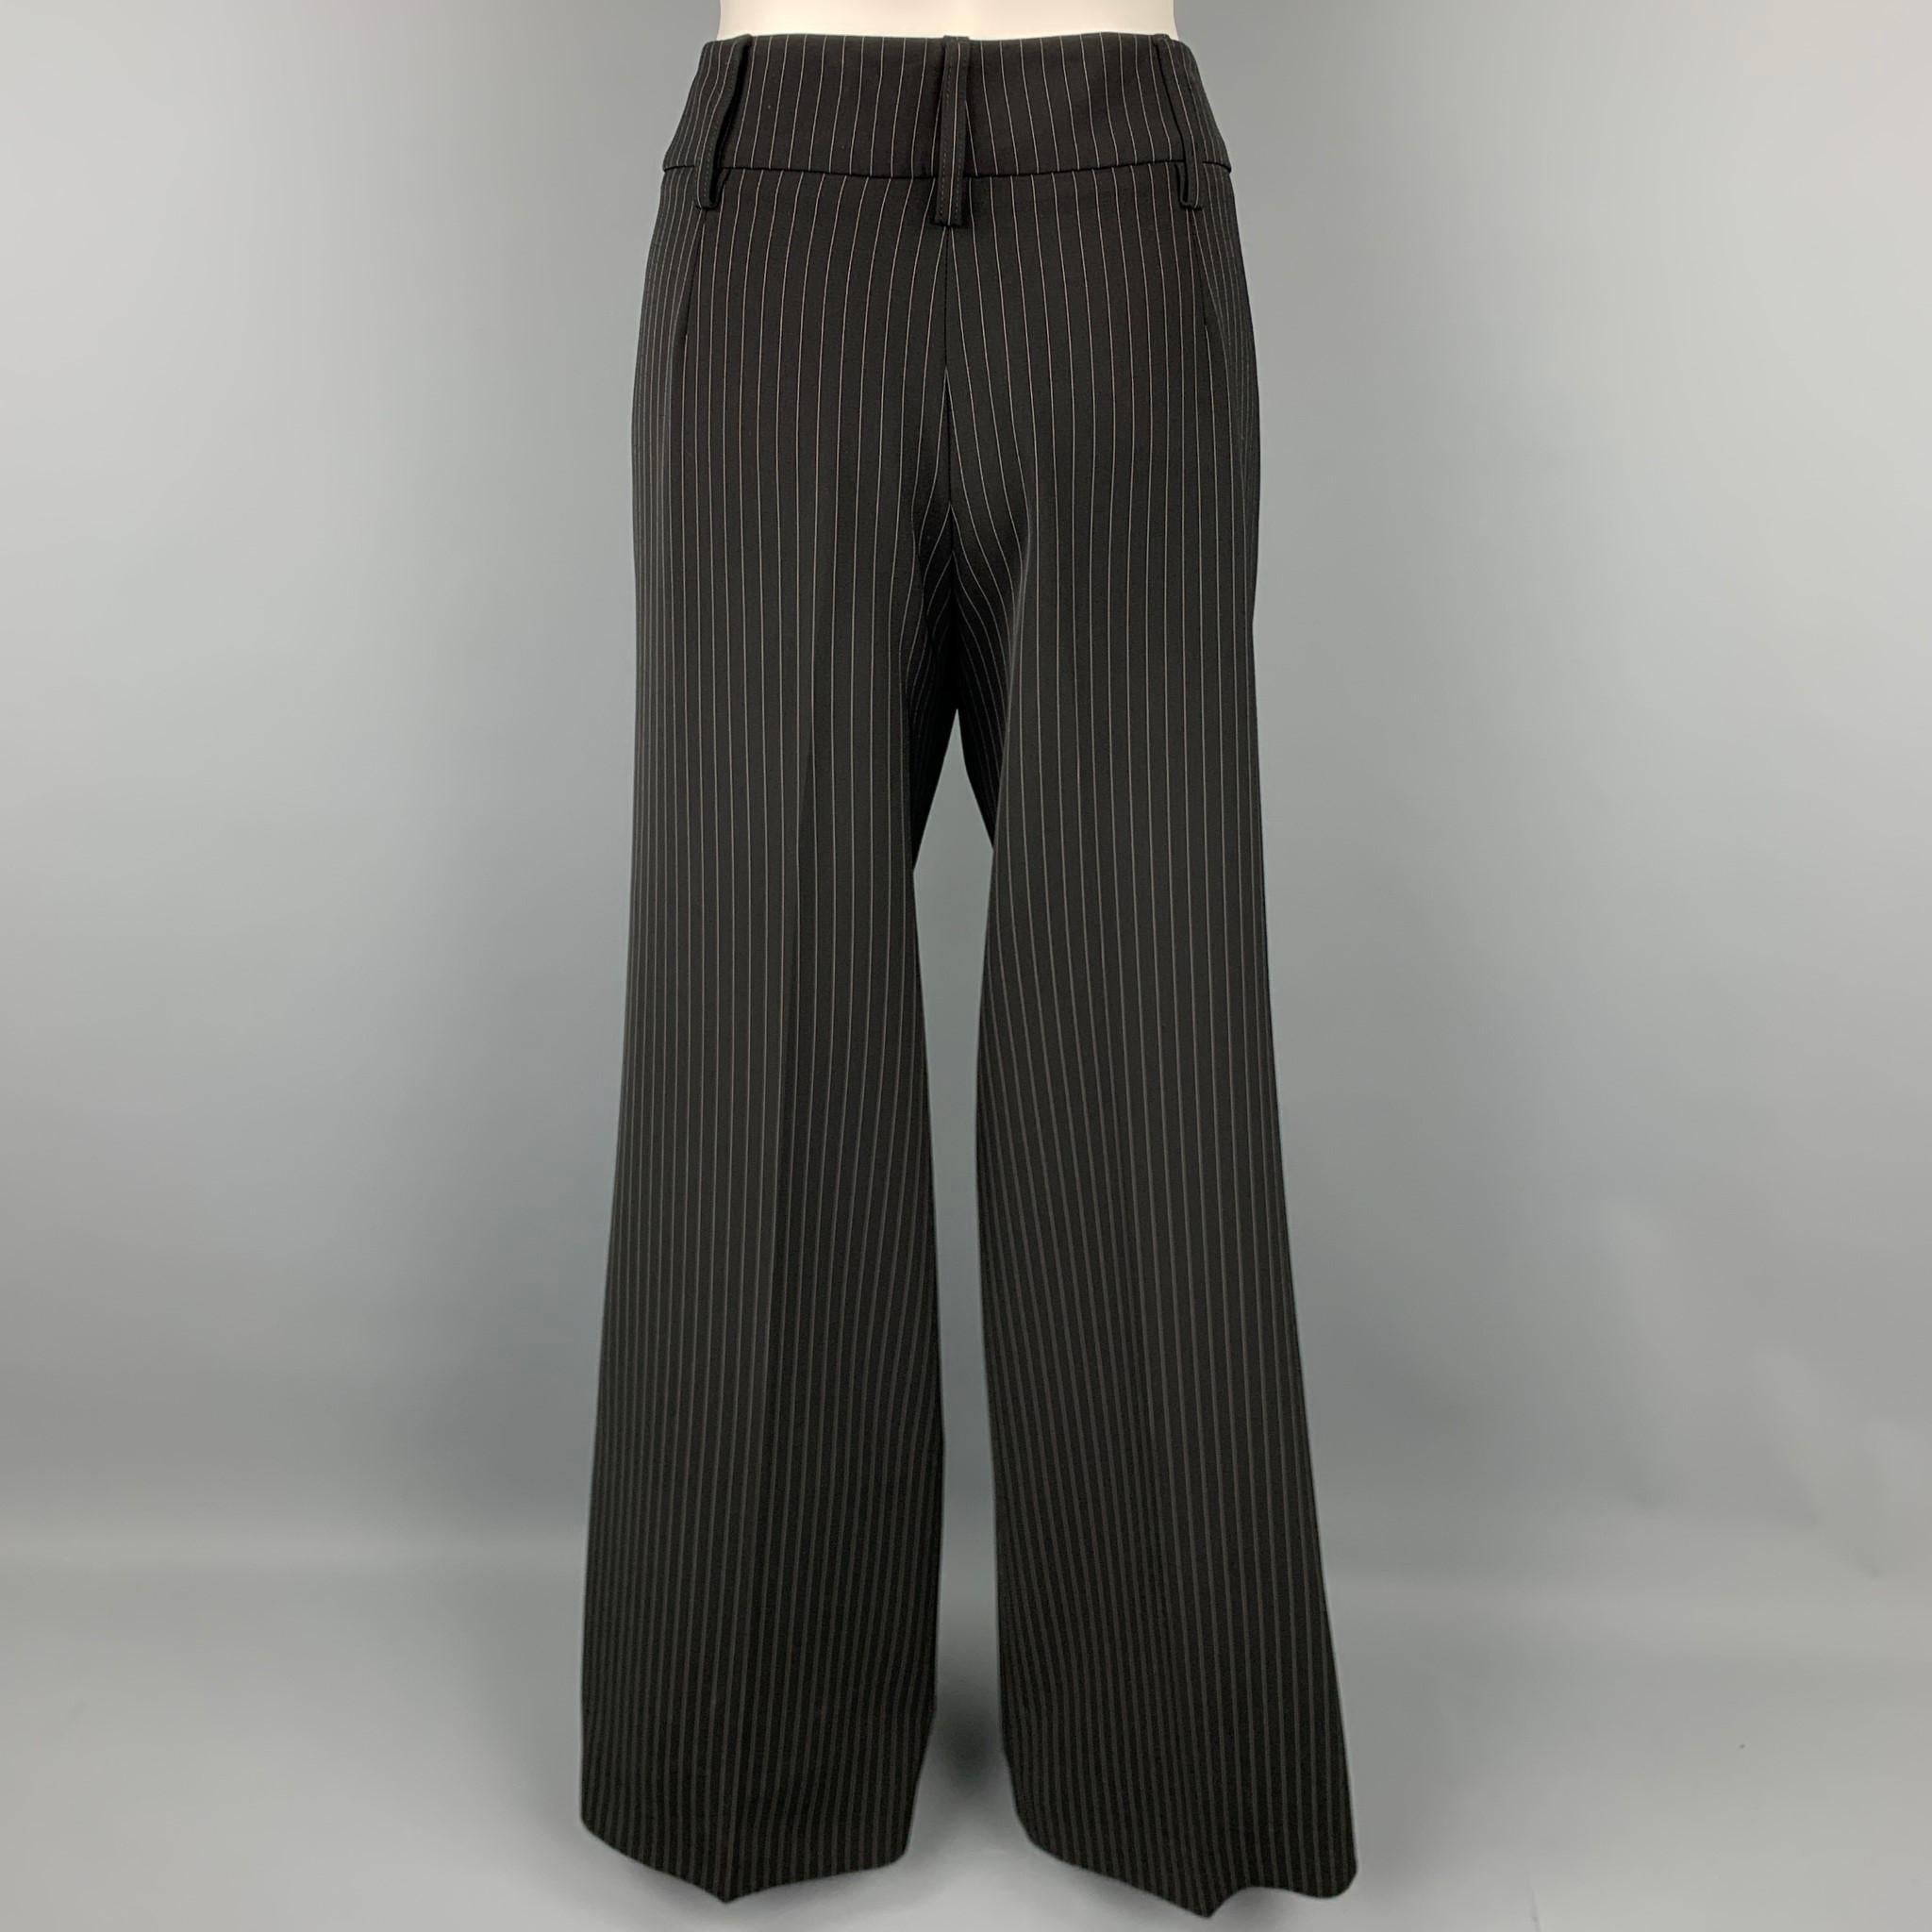 polyester dress pants